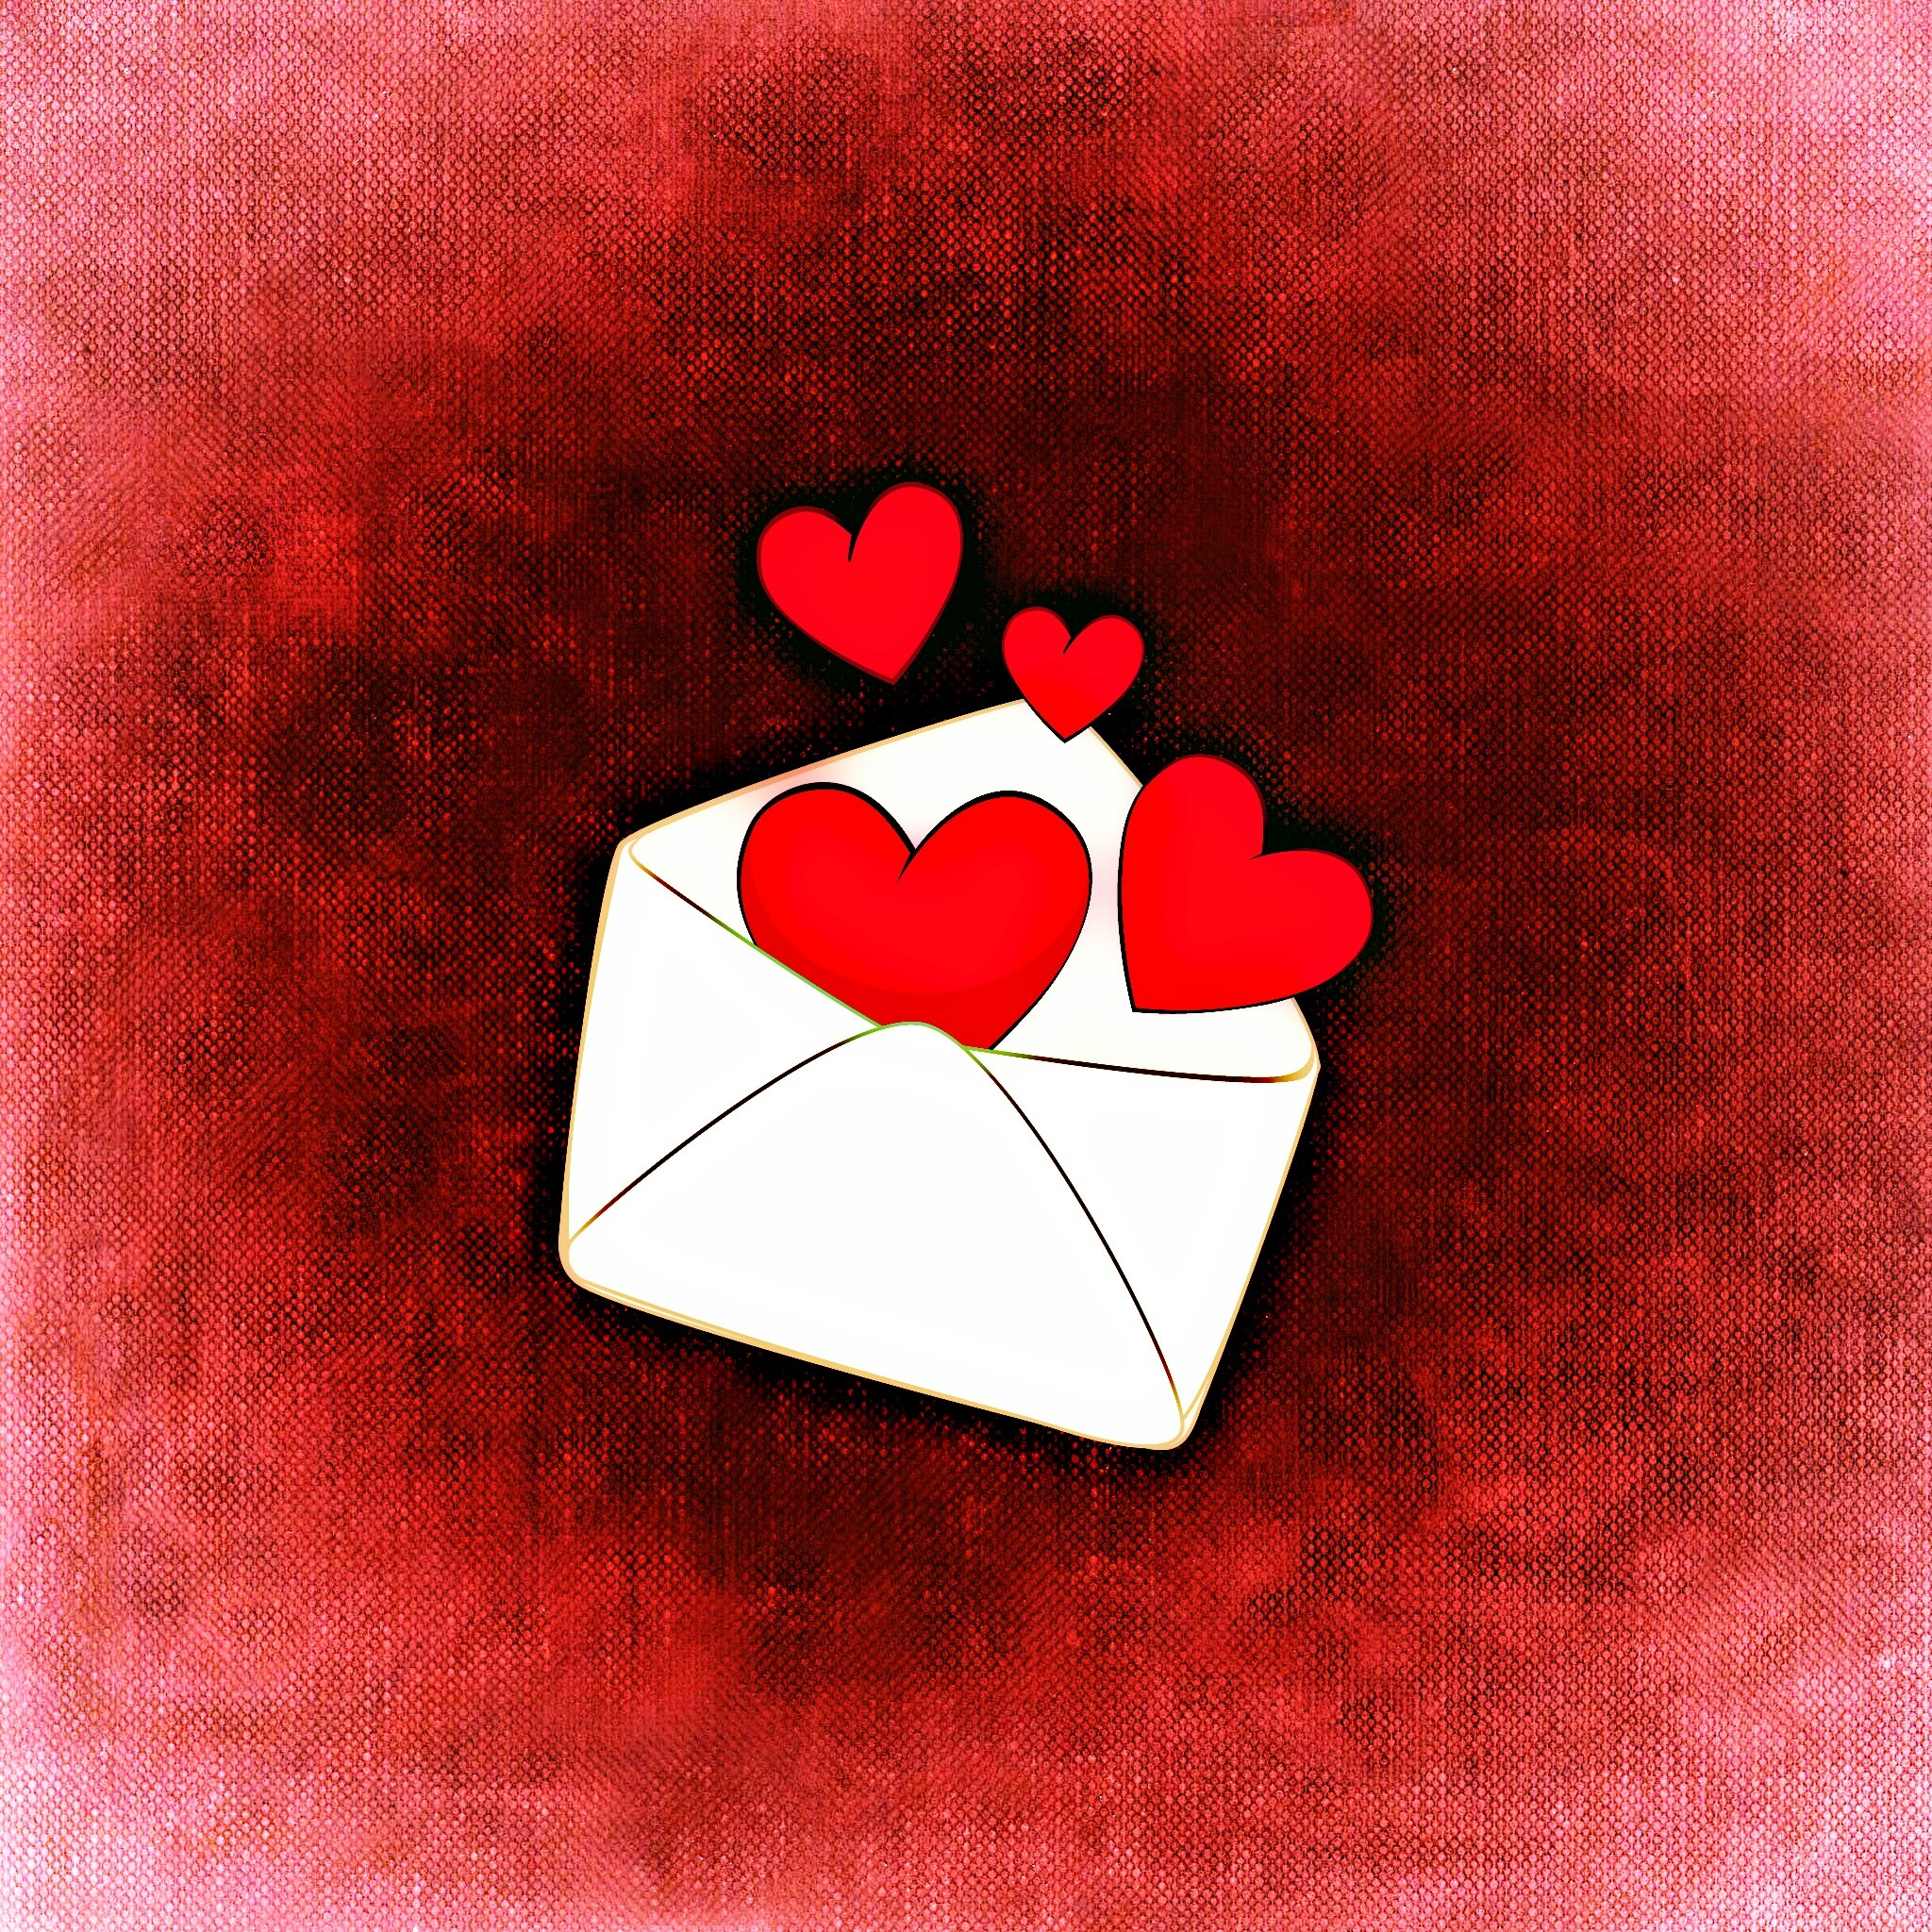 romance, hearts, art, love, envelope